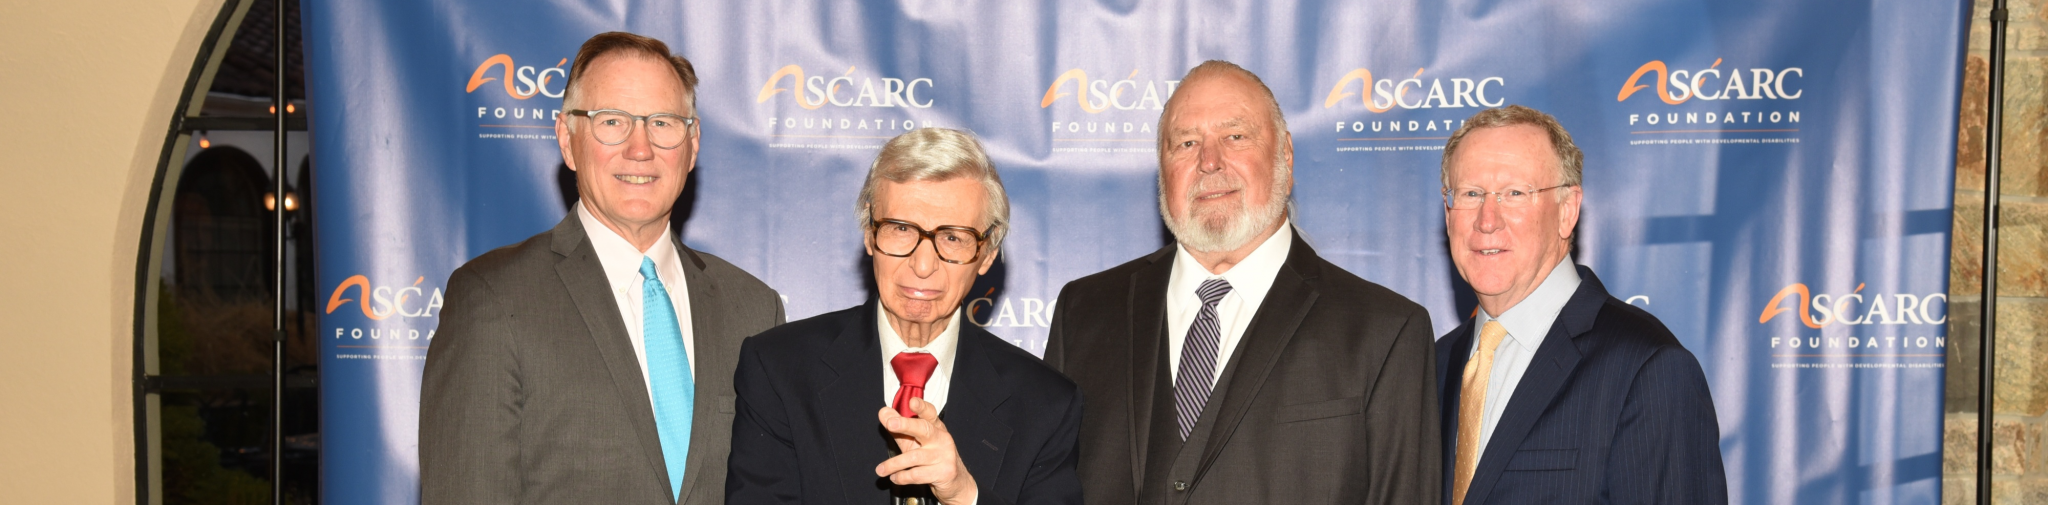 SCARC Foundation Honors Leadership Awards Gala